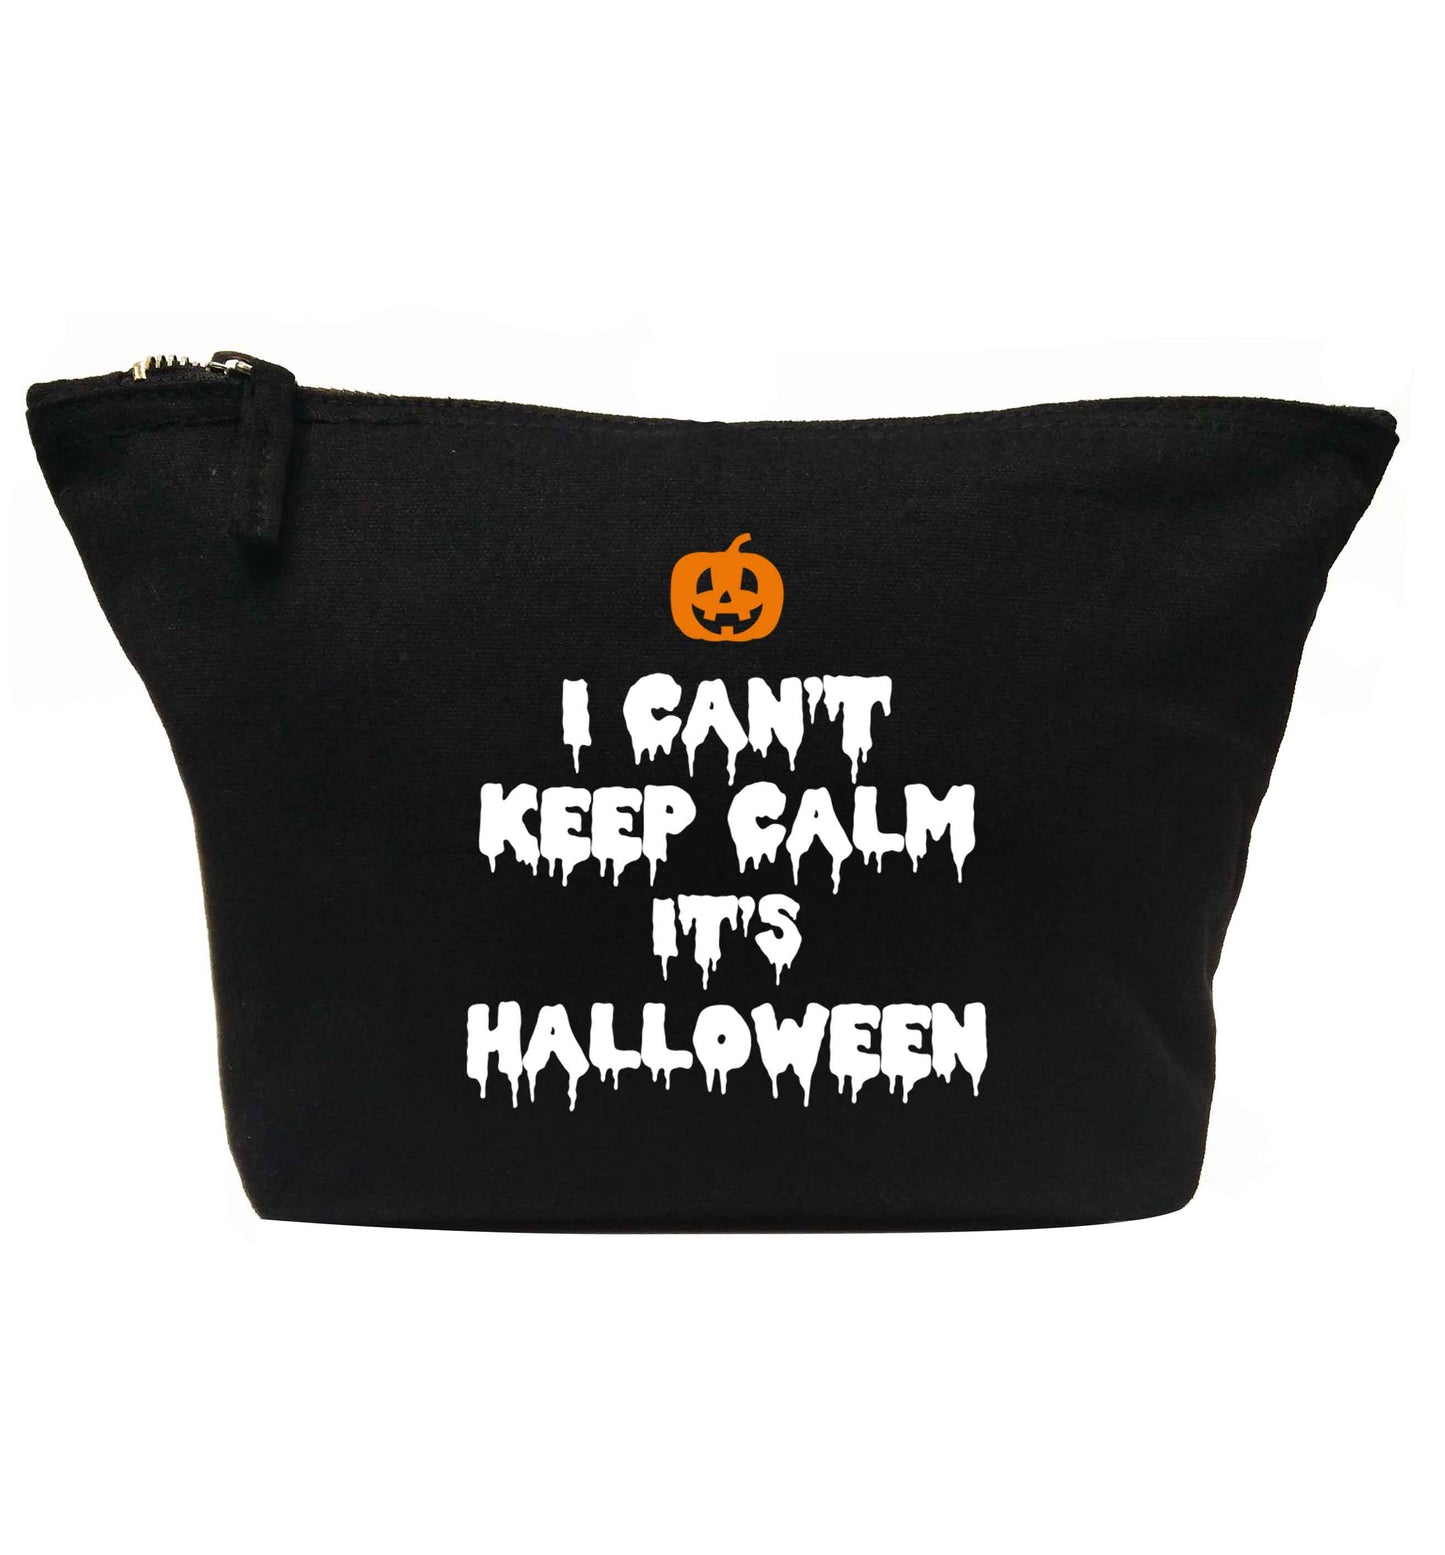 I can't keep calm it's halloween | Makeup / wash bag